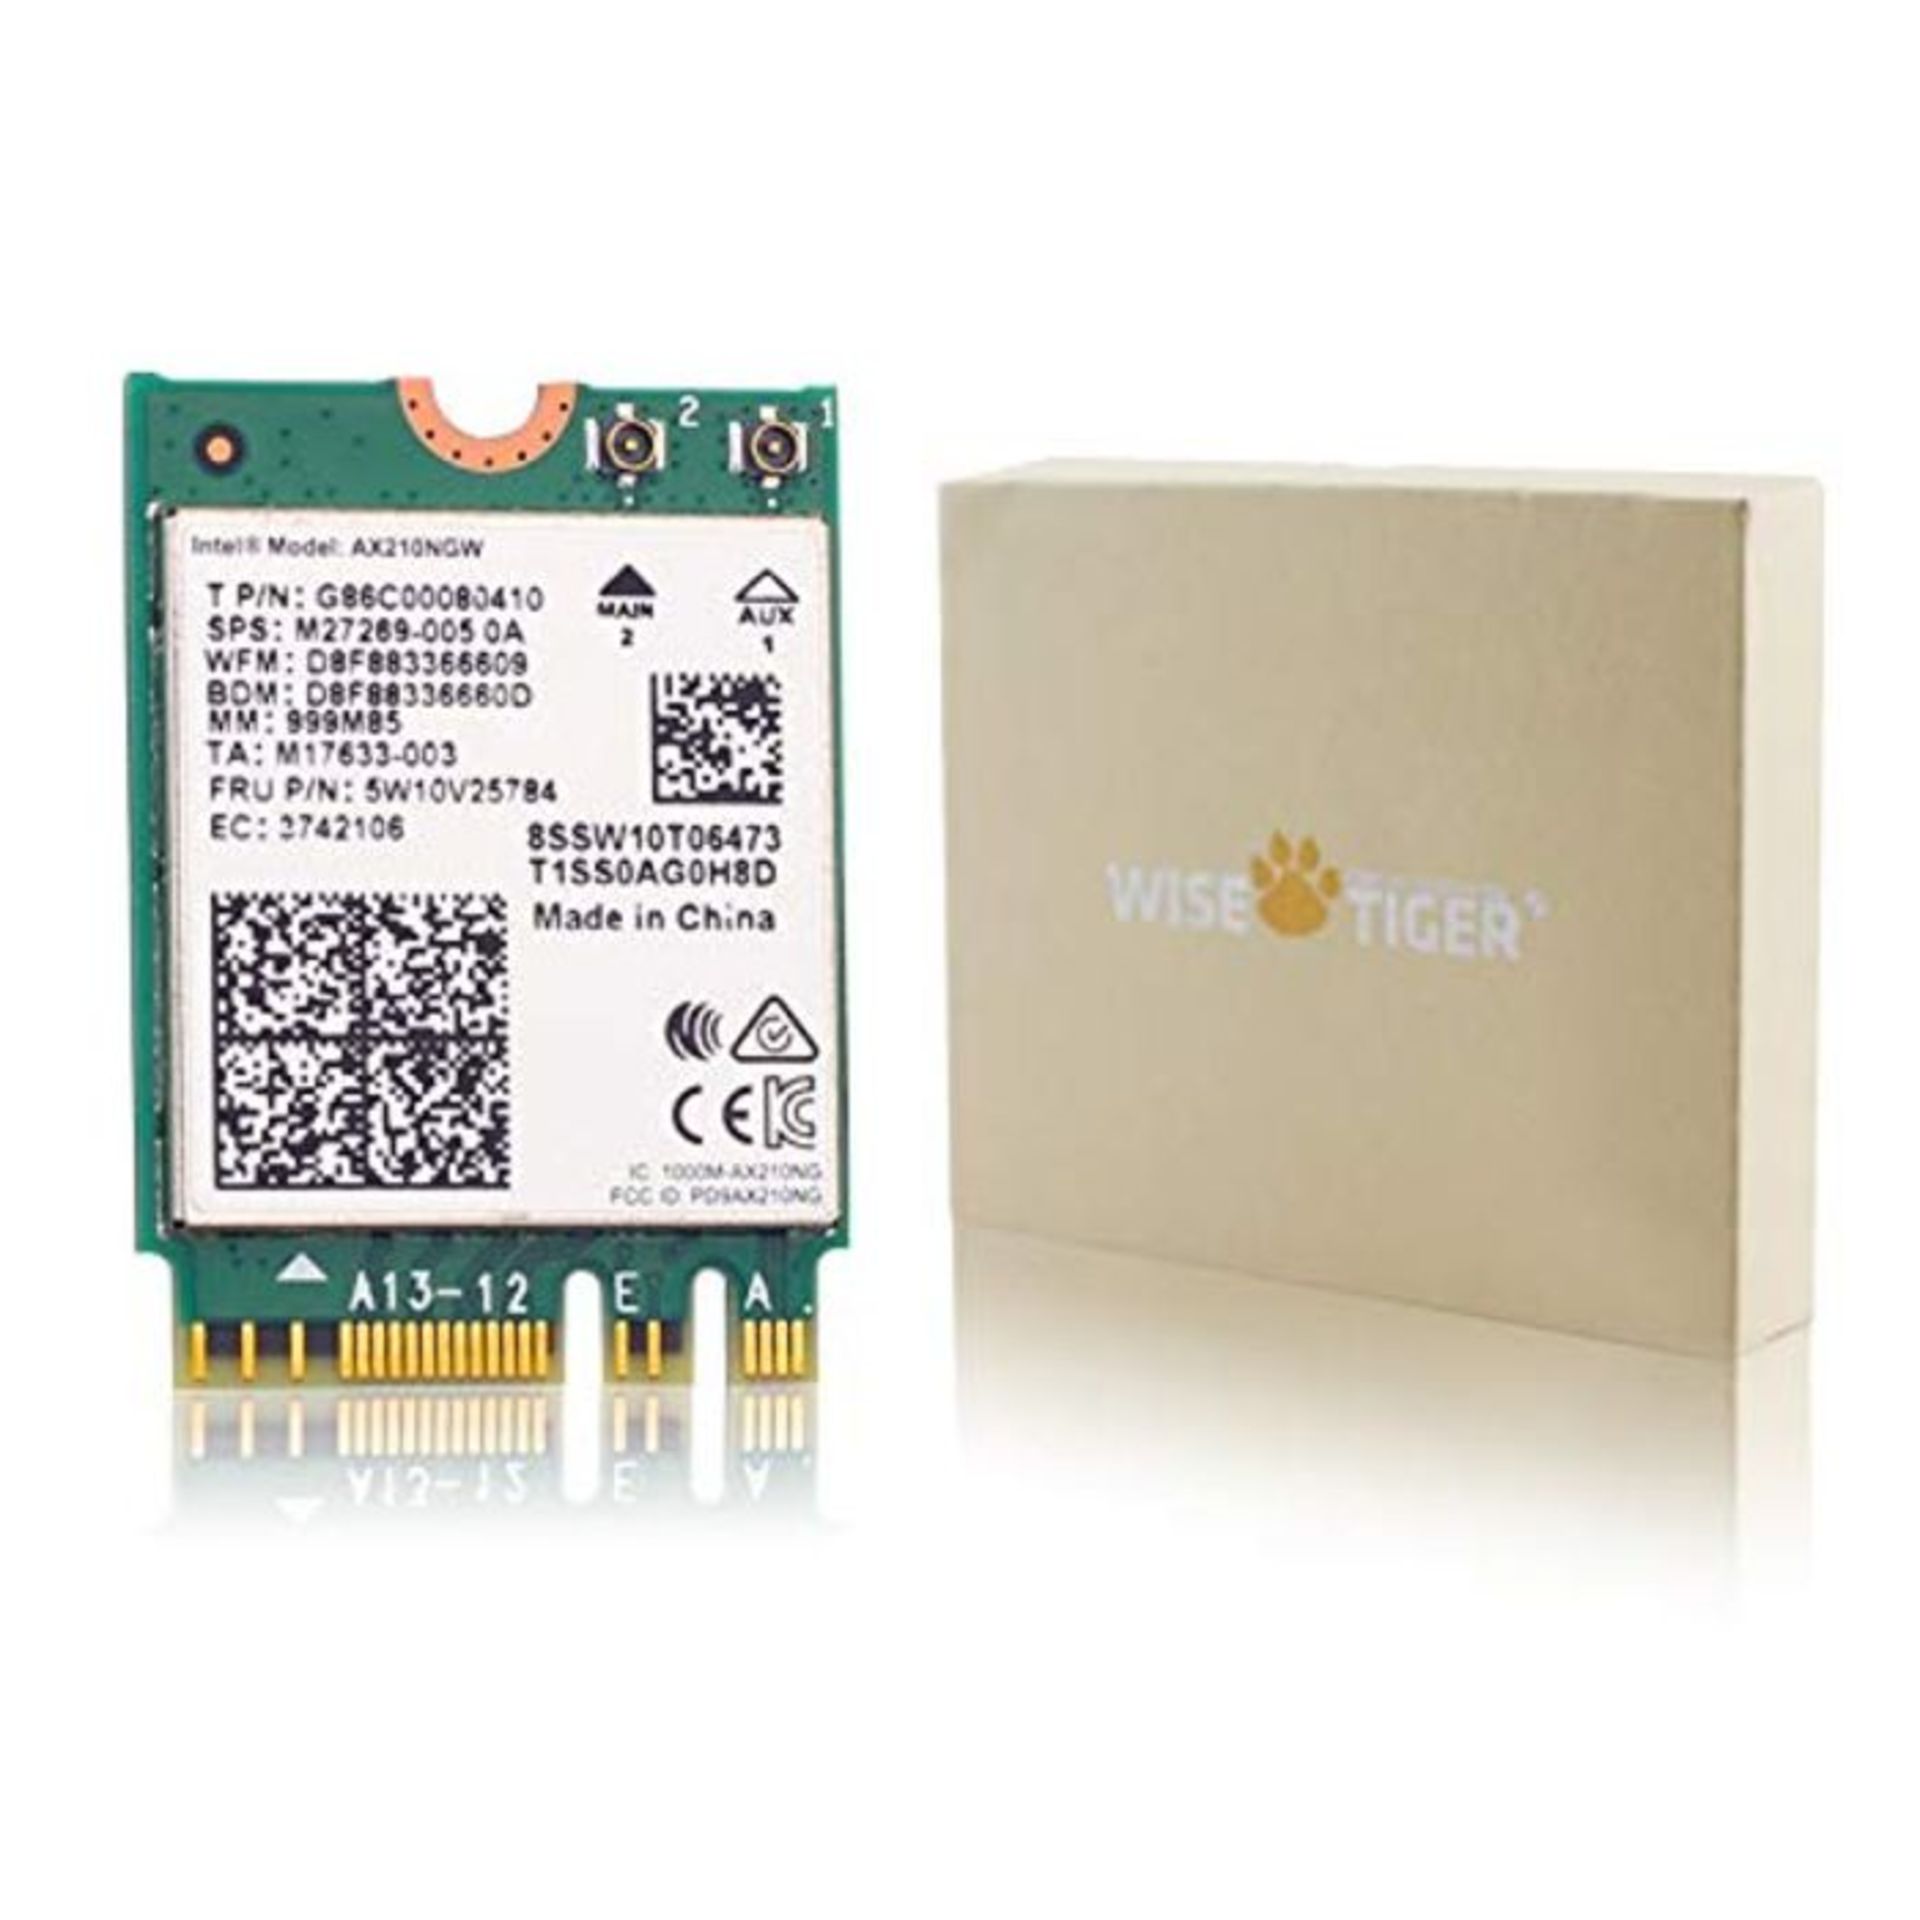 WISE TIGER AX210NGW WiFi Card, Wi-Fi 6E 11AX Wireless Module Expand to 6GHz MU-MIMO Tr